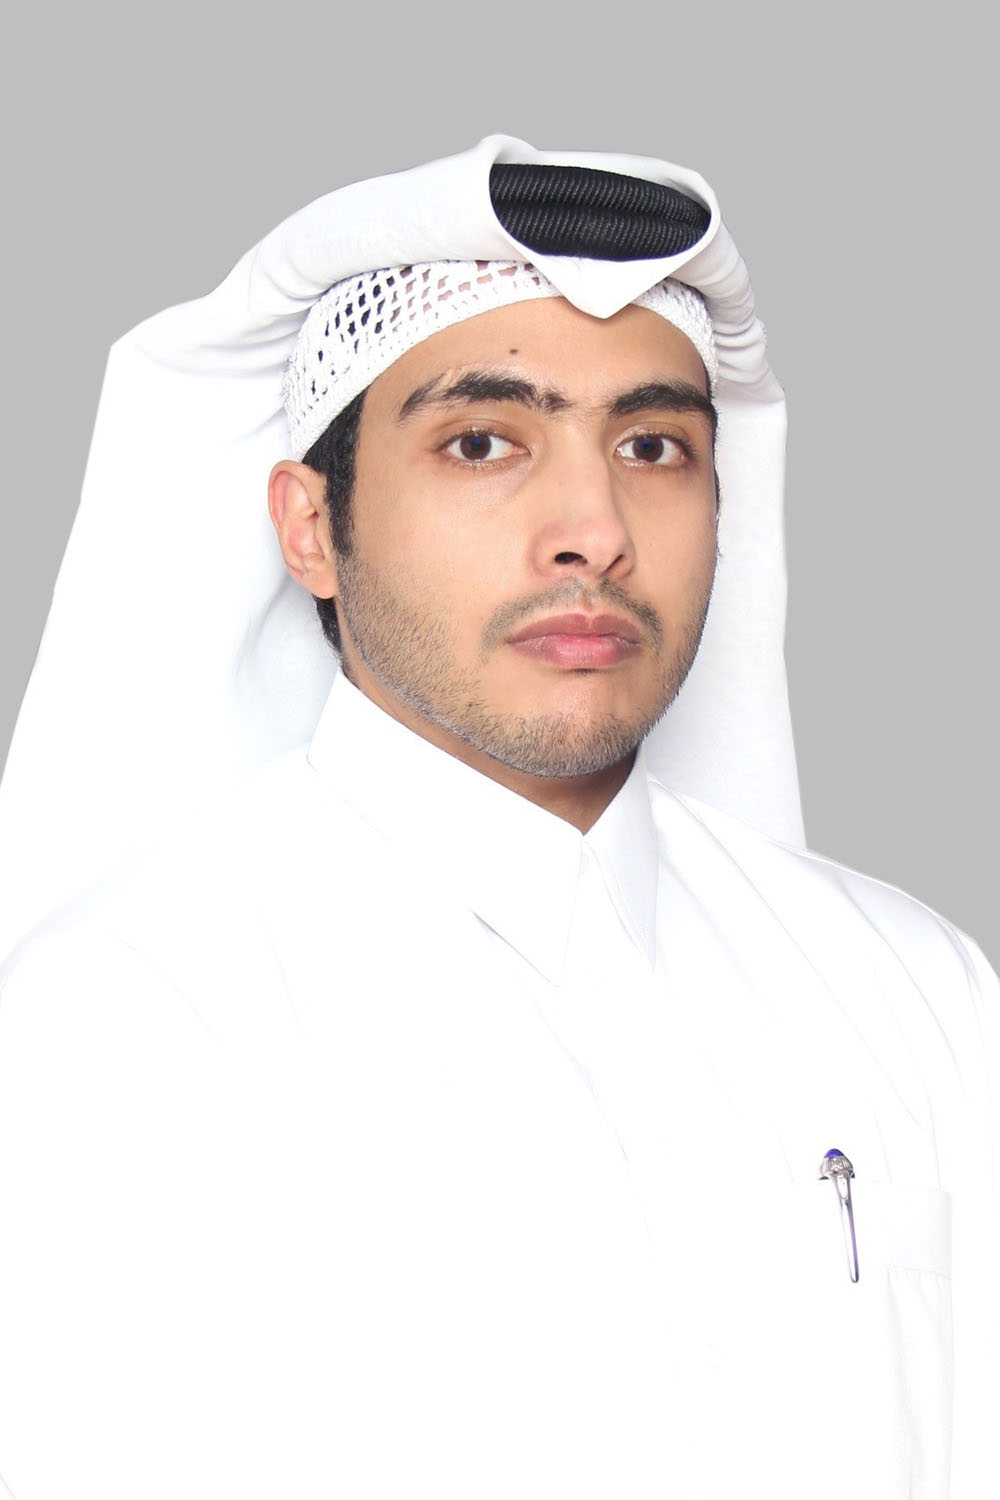 Mr.-Abdulrahman-Essa-Al-Mannai-Milahas-President-and-CEO.jpg